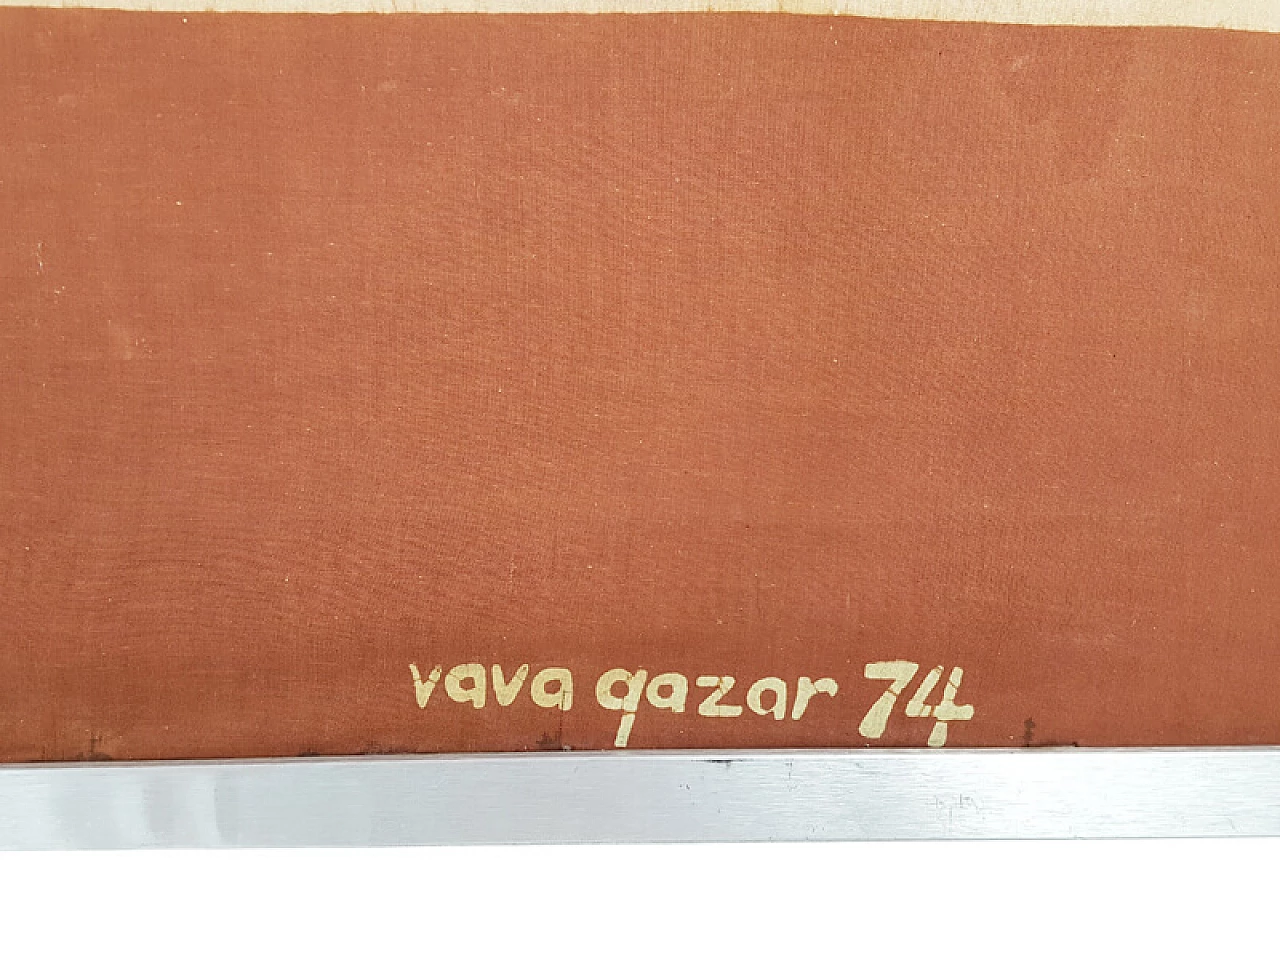 Batik technique printed fabric by Vava Quazar, 1974 5